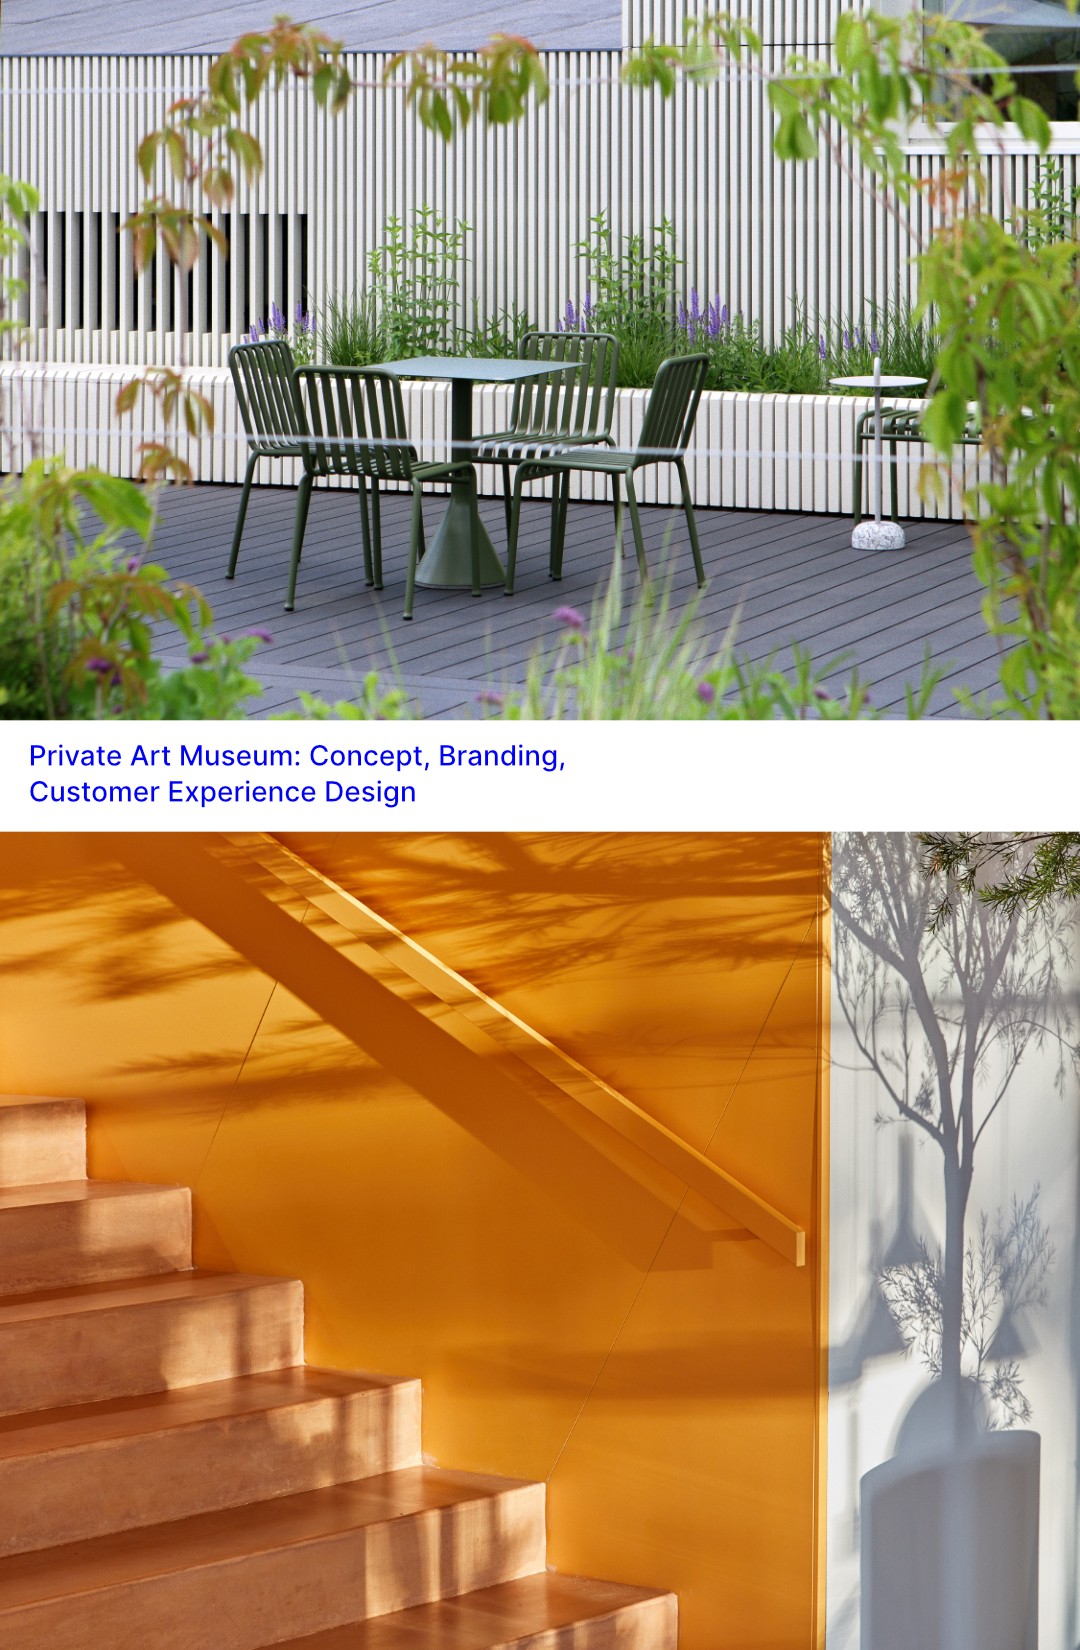 Private Art Museum: Concept, Branding, Customer Experience Design